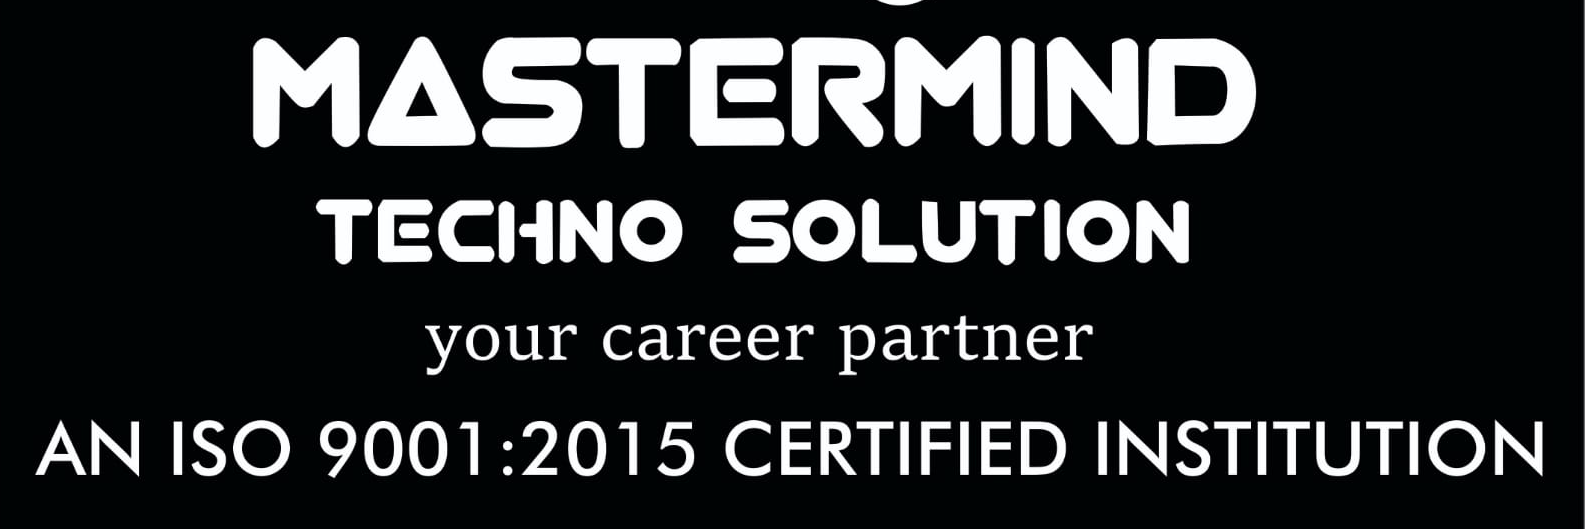 Mastermind Techno Solution Logo